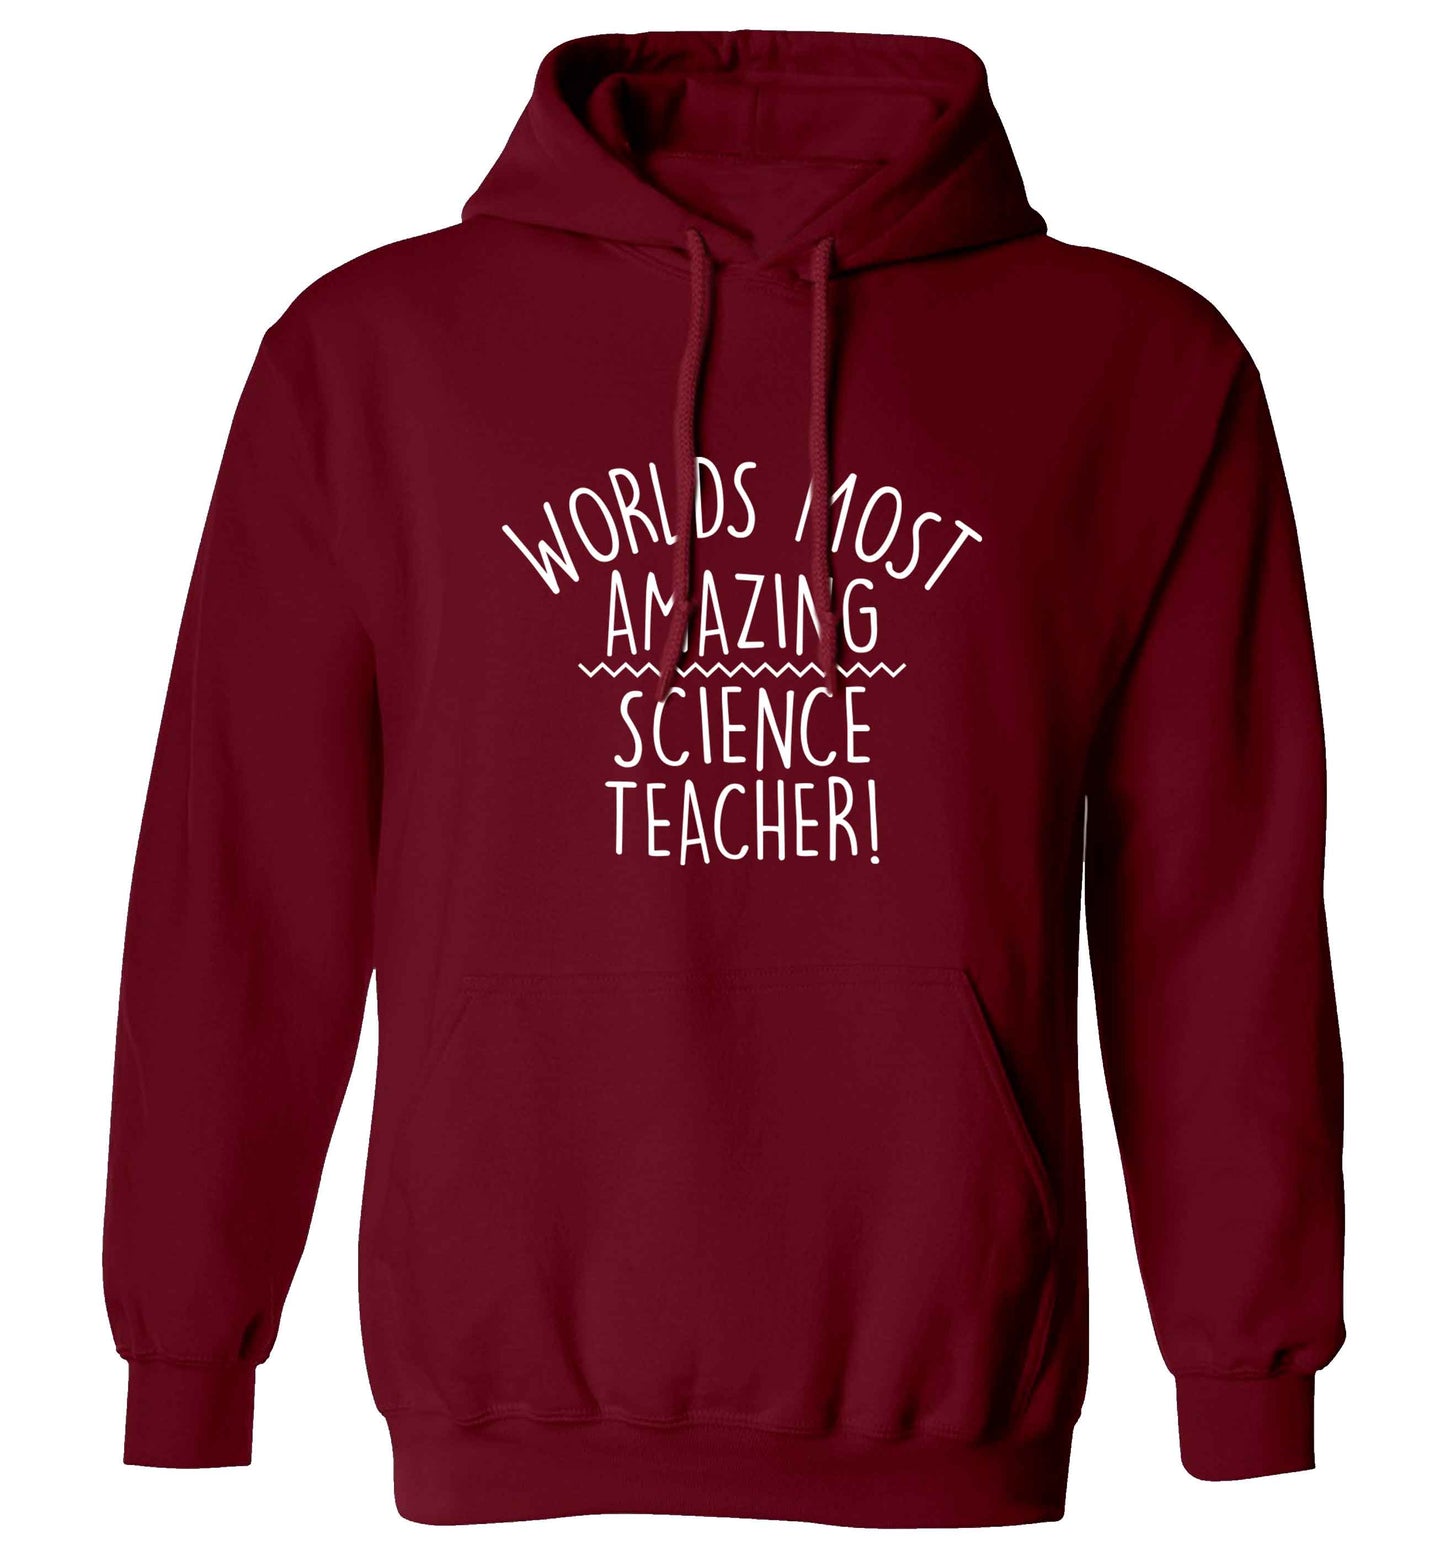 Worlds most amazing science teacher adults unisex maroon hoodie 2XL